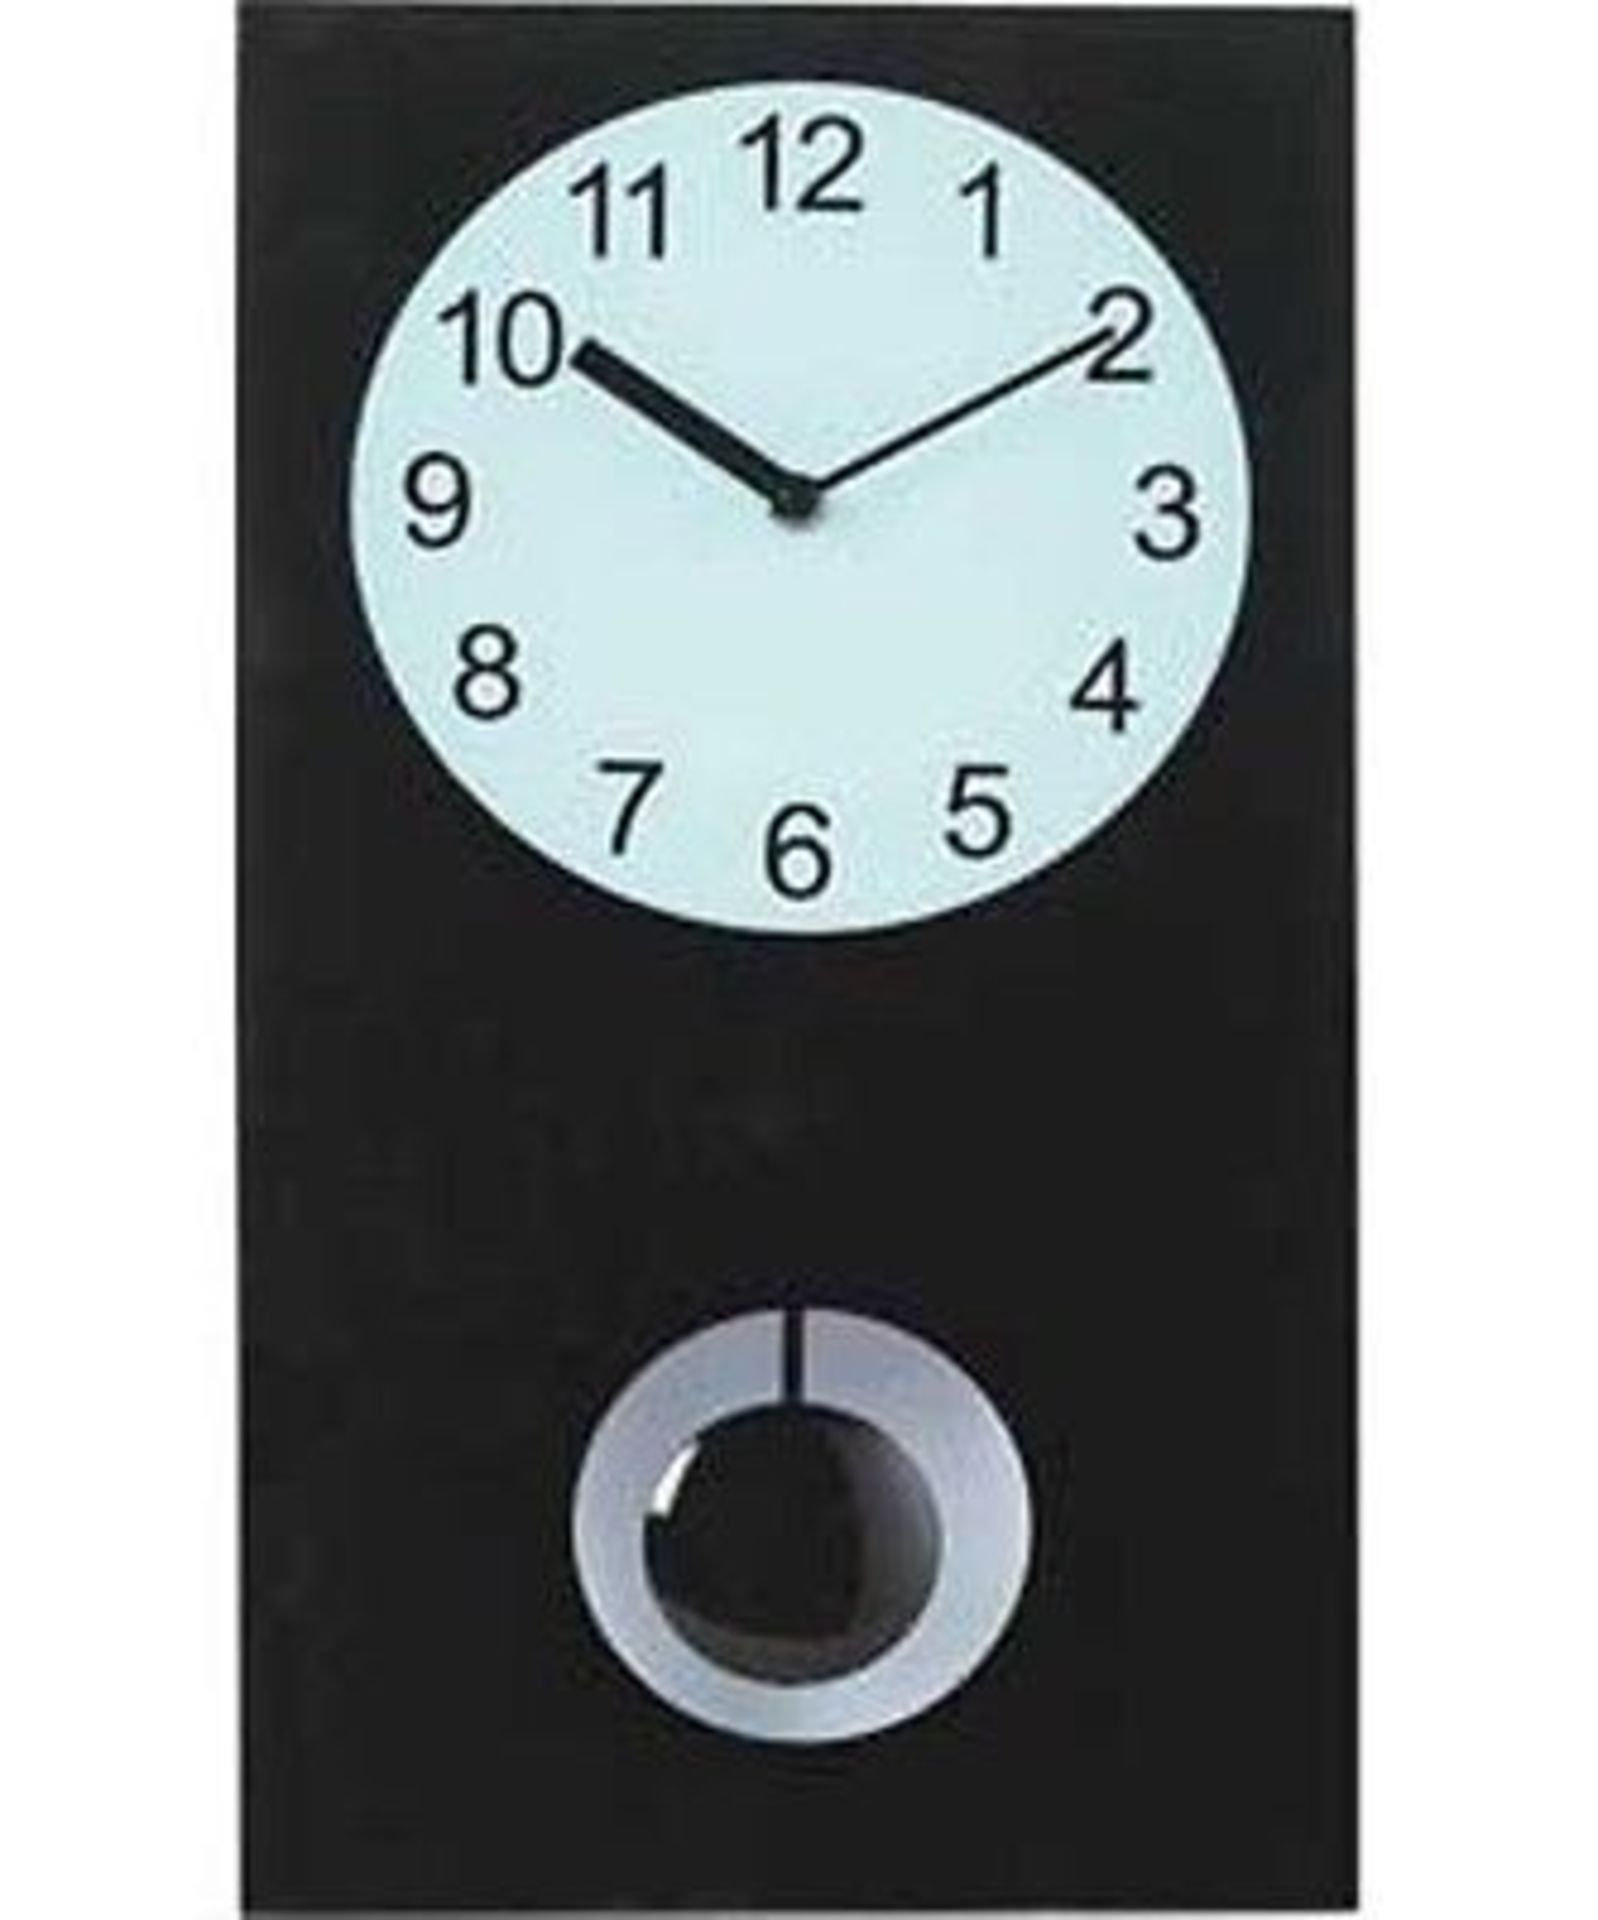 *TRADE QTY* Brand New Black Gloss Pendulum Clock 45 X 25cm Argos Price £30 X 10 YOUR BID PRICE TO